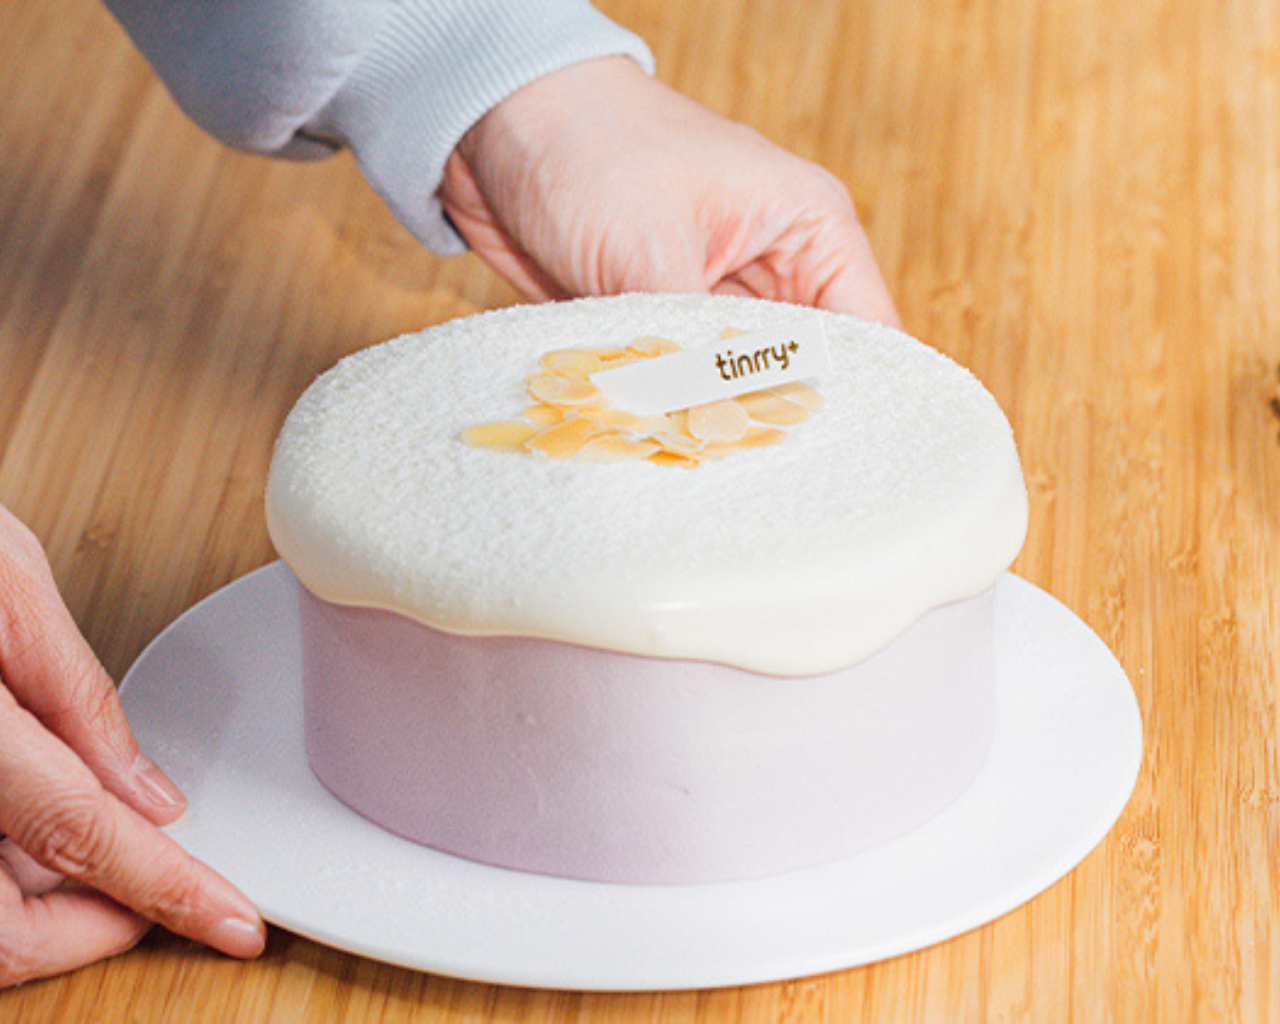 《Tinrry+》椰香芋泥啵啵蛋糕的做法